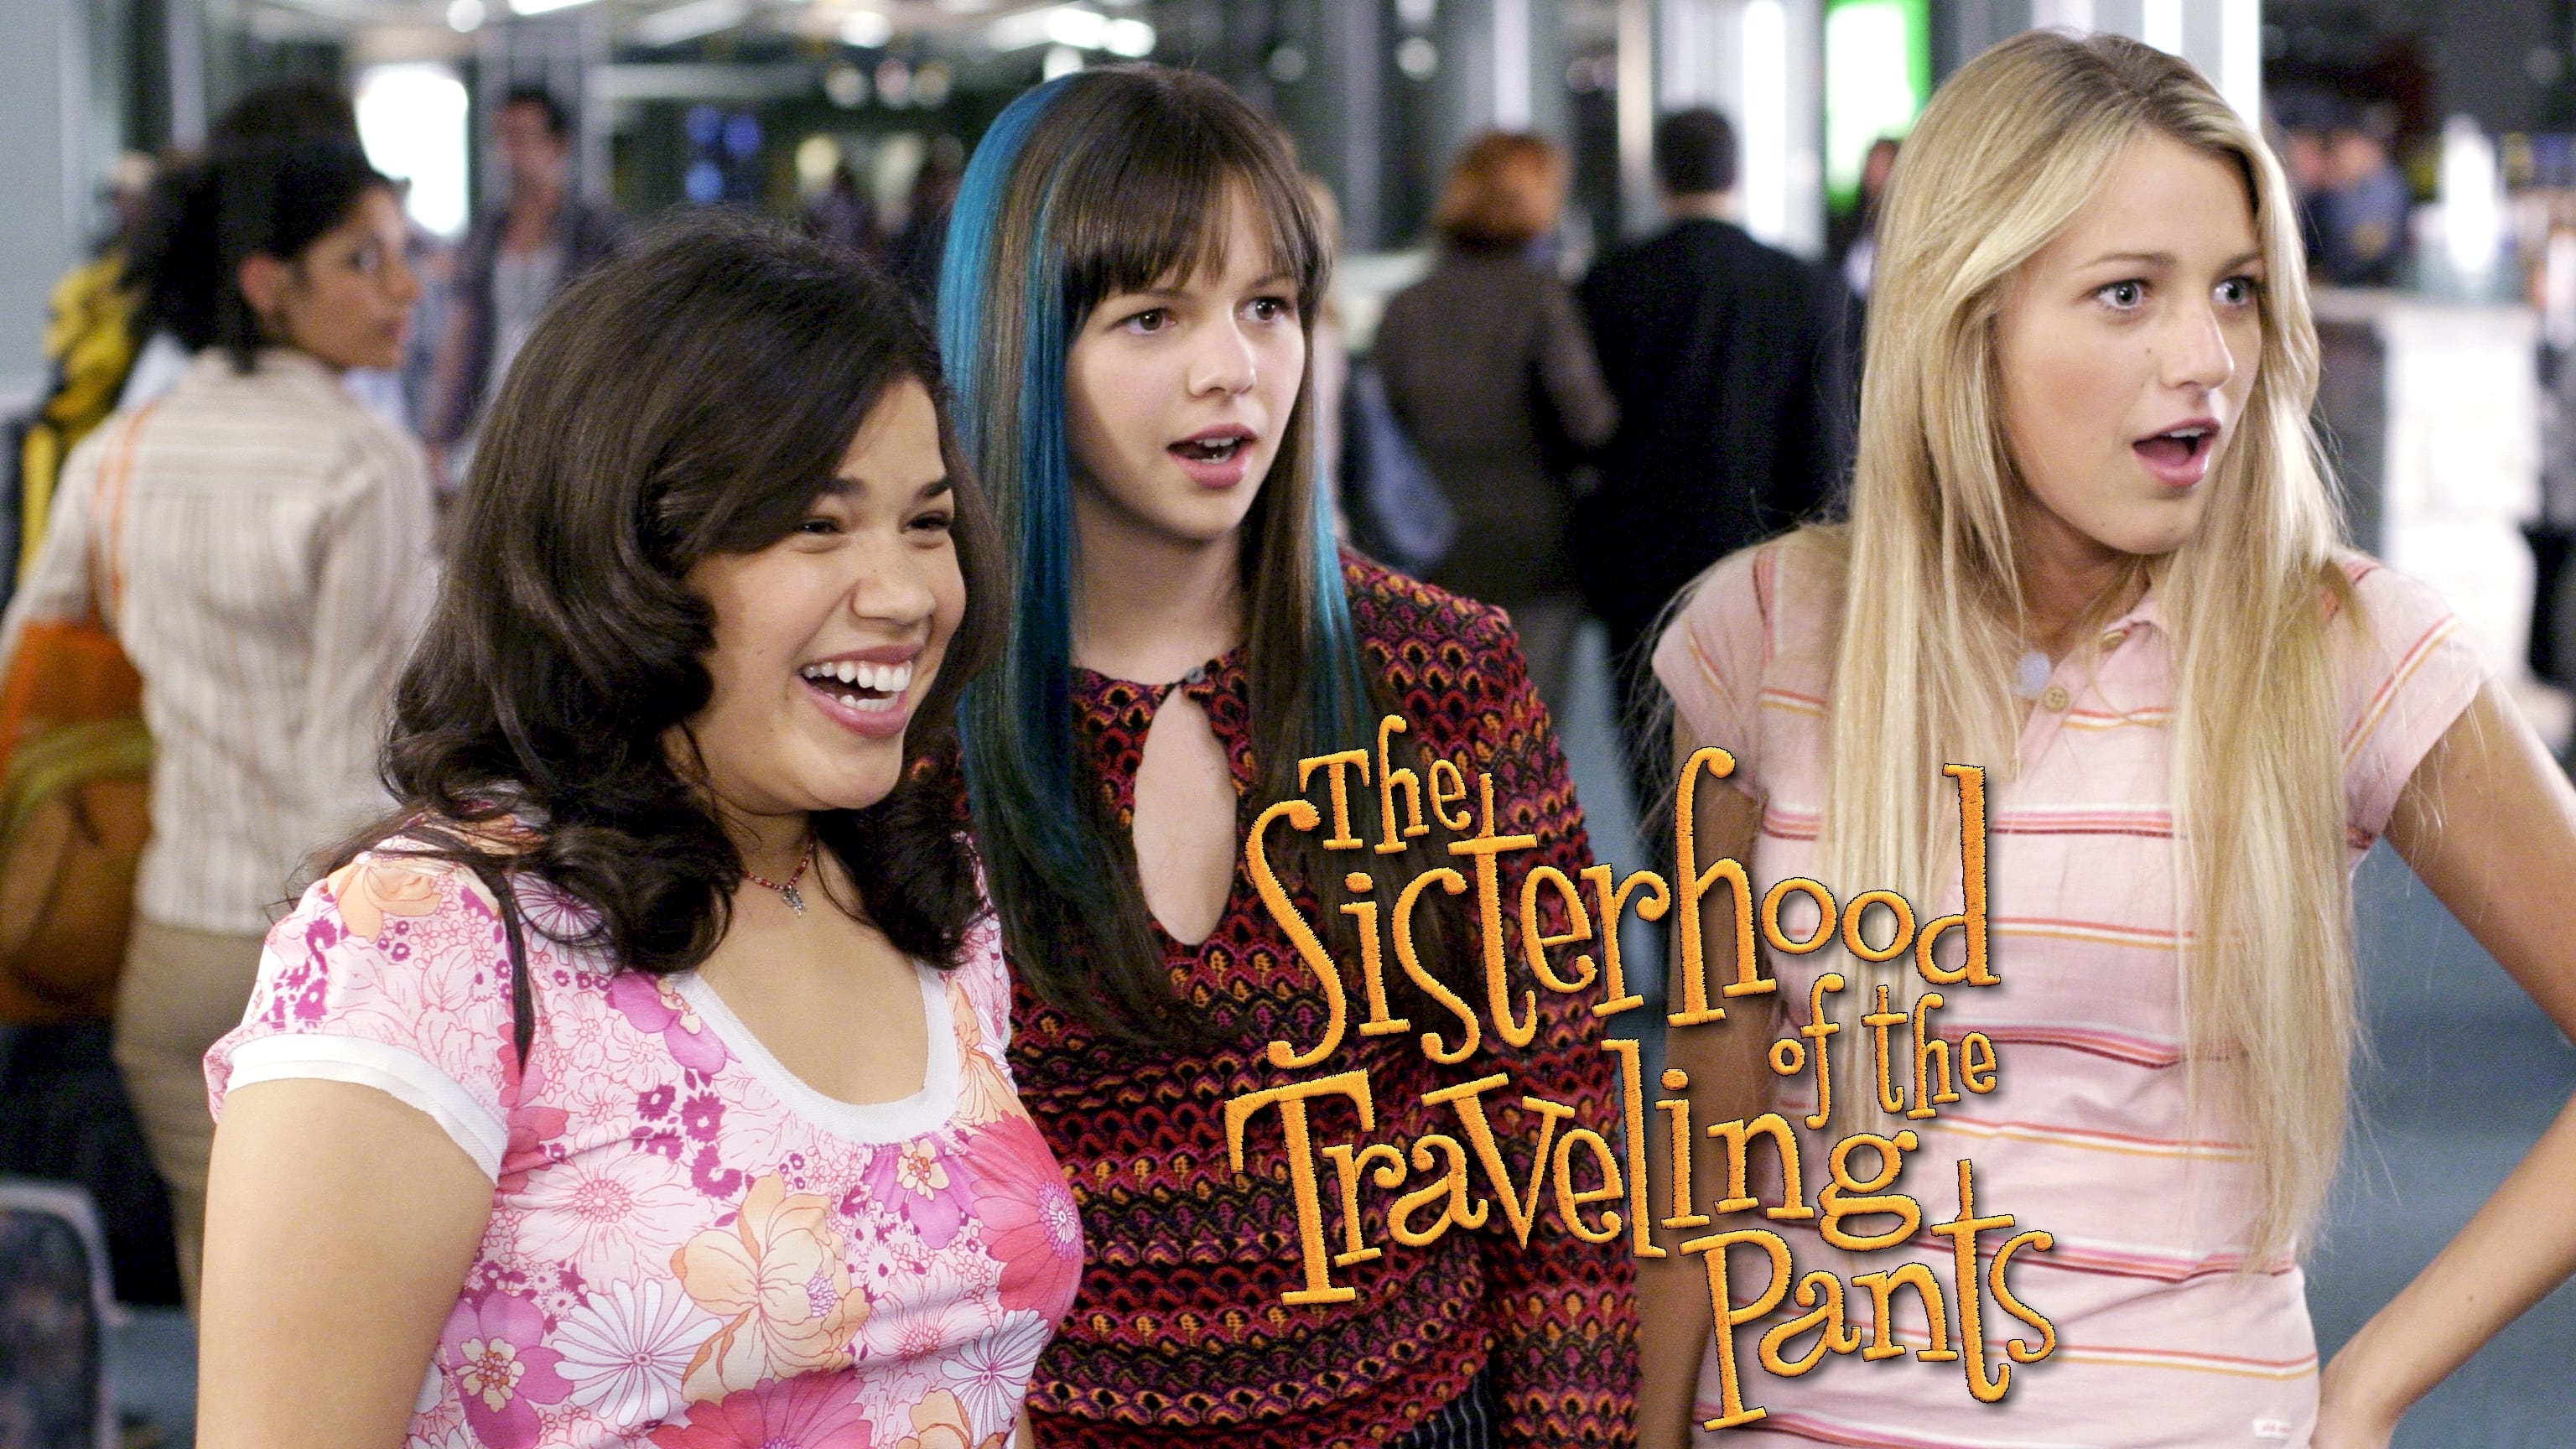 The Sisterhood of the Traveling Pants (2005)